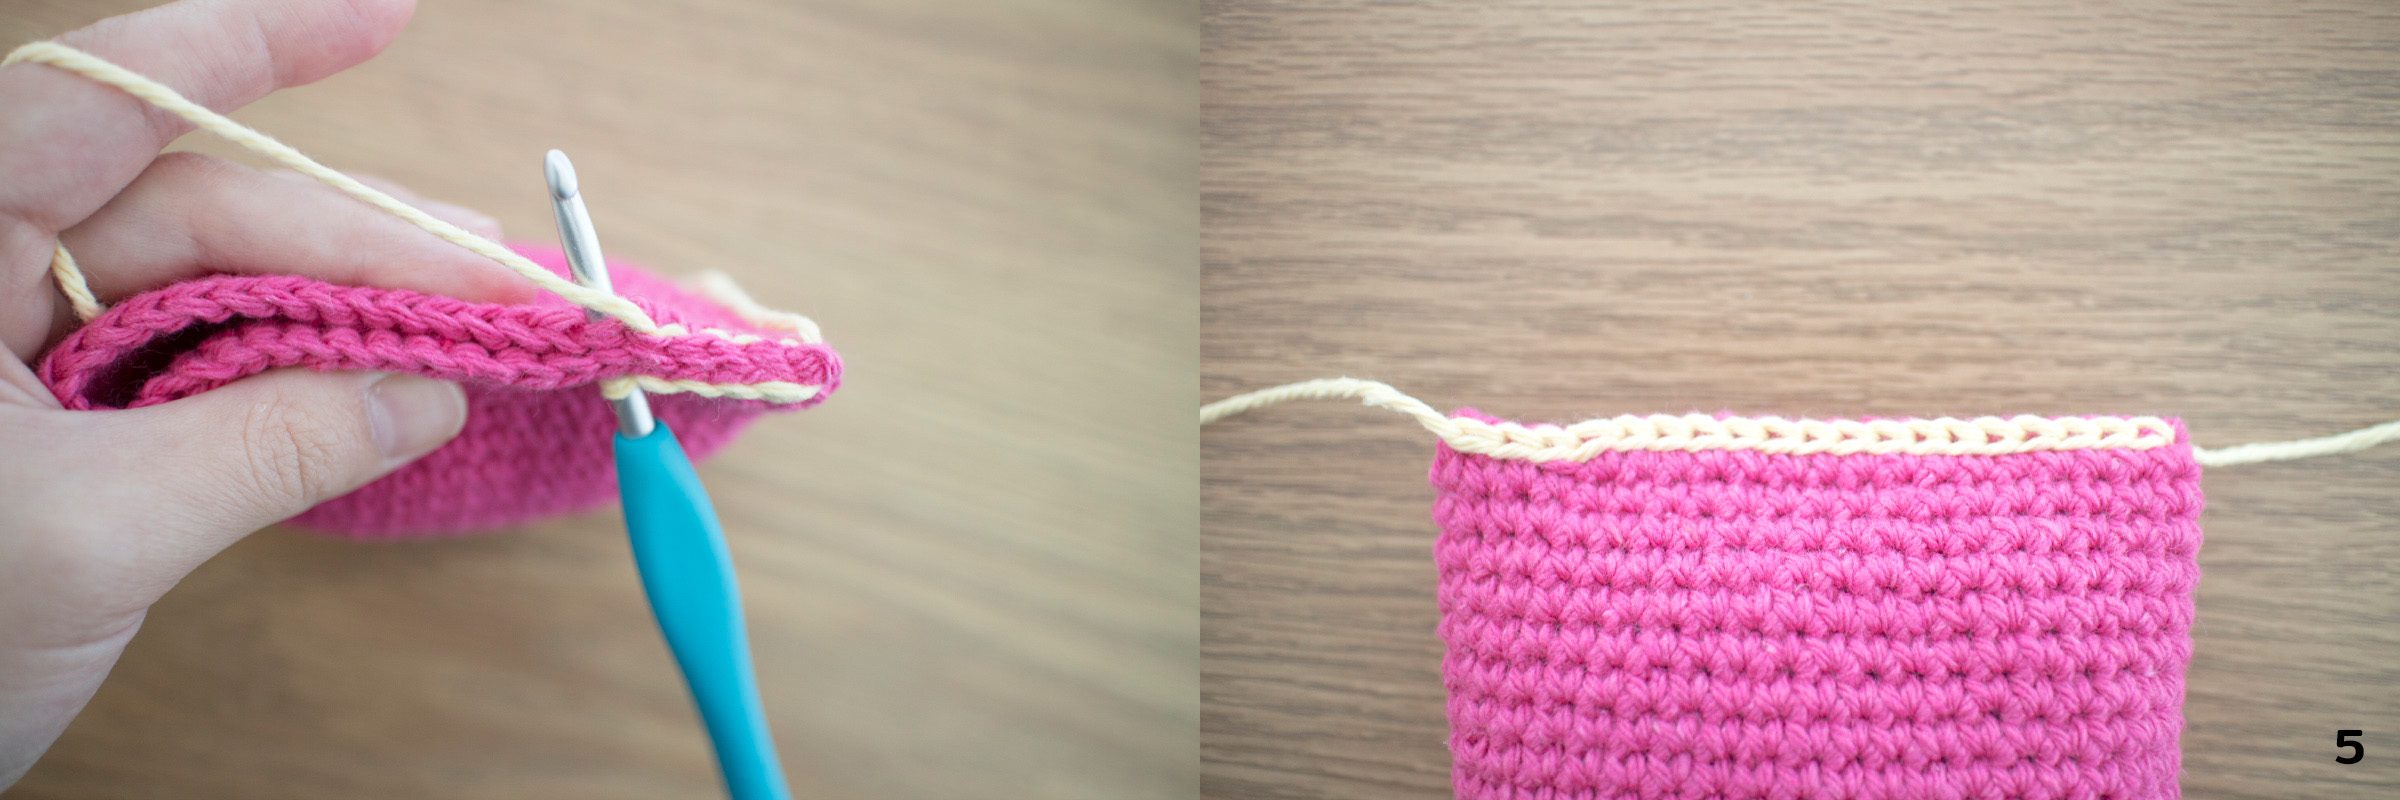 Mini Bean Bags Free Crochet Pattern